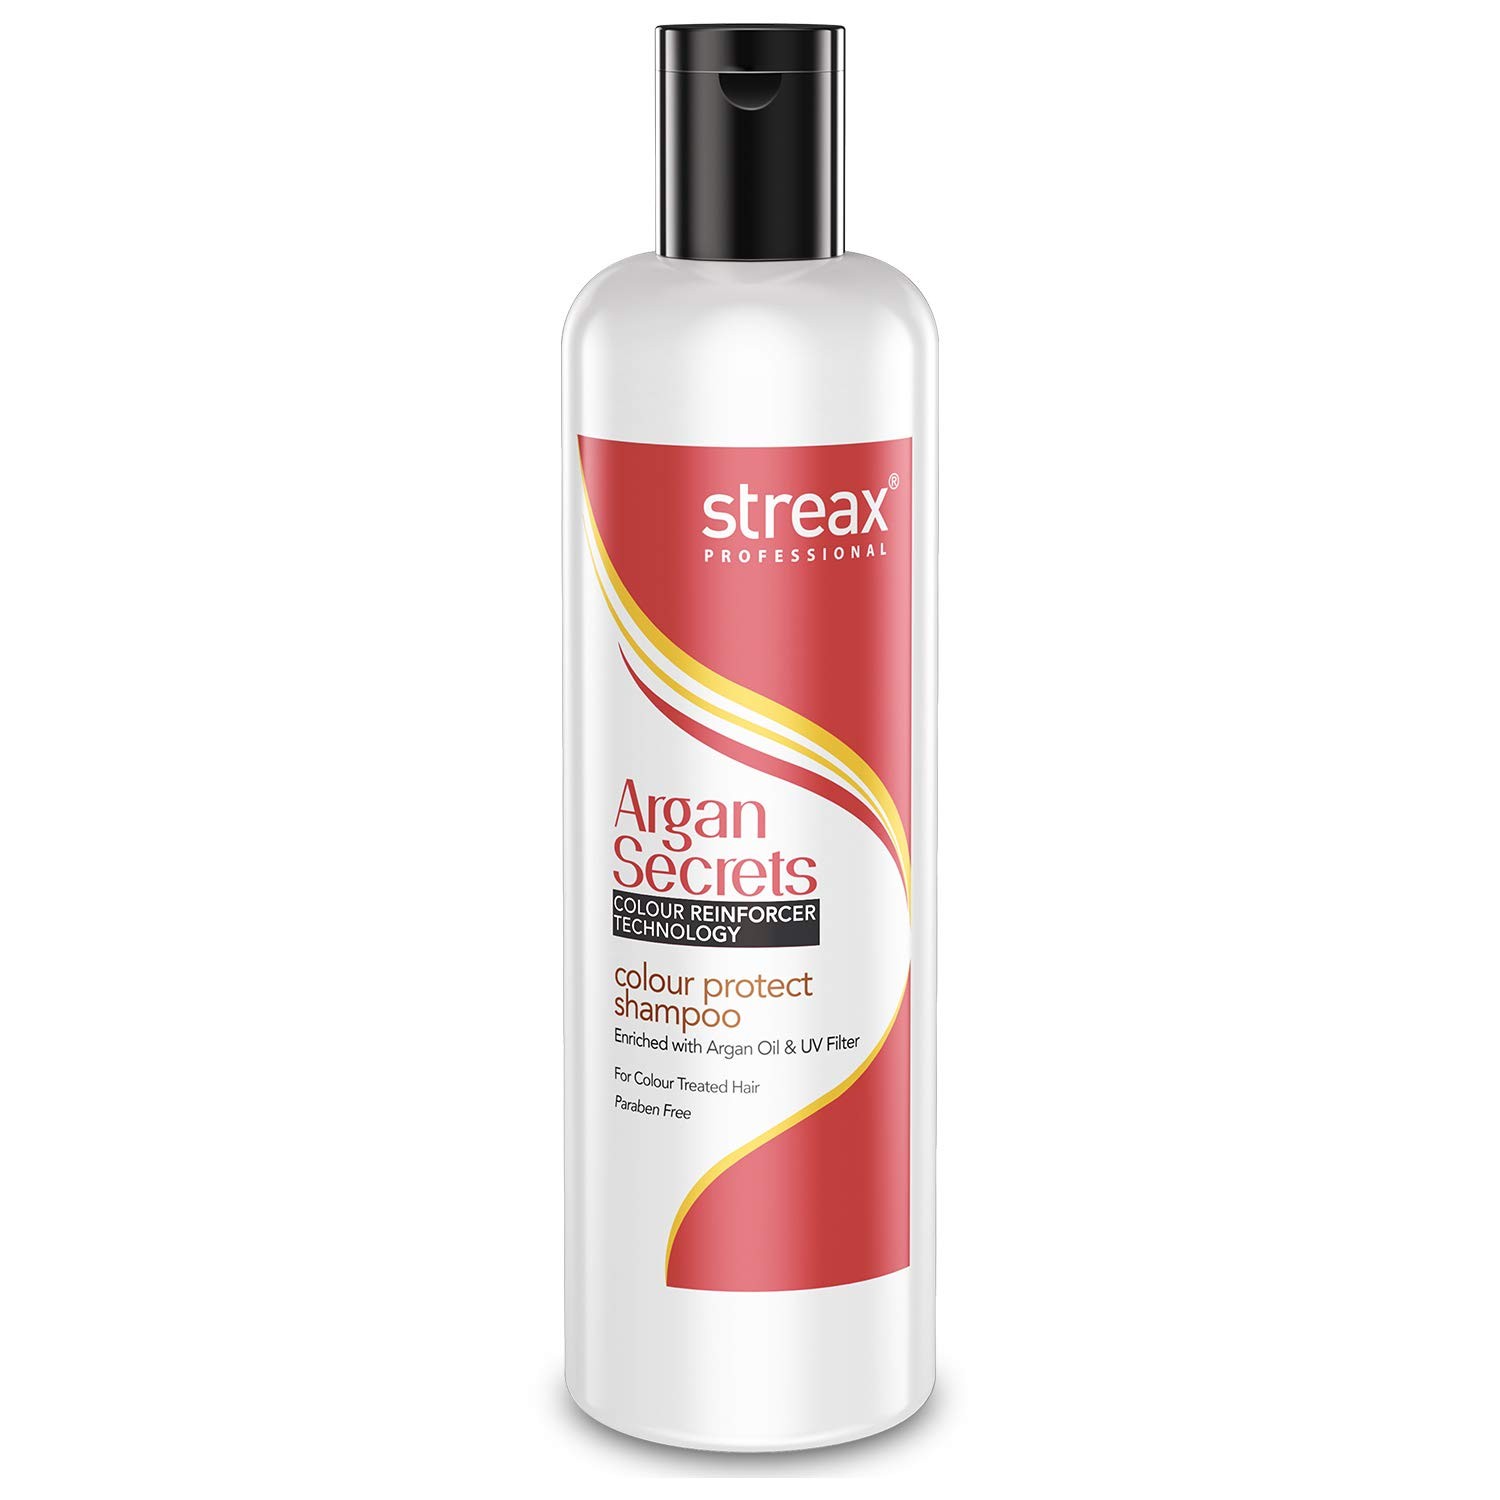 Streax Professional Argan Secrets Colour Protect Shampoo for Women |  Enriched with Argan Oil & UV